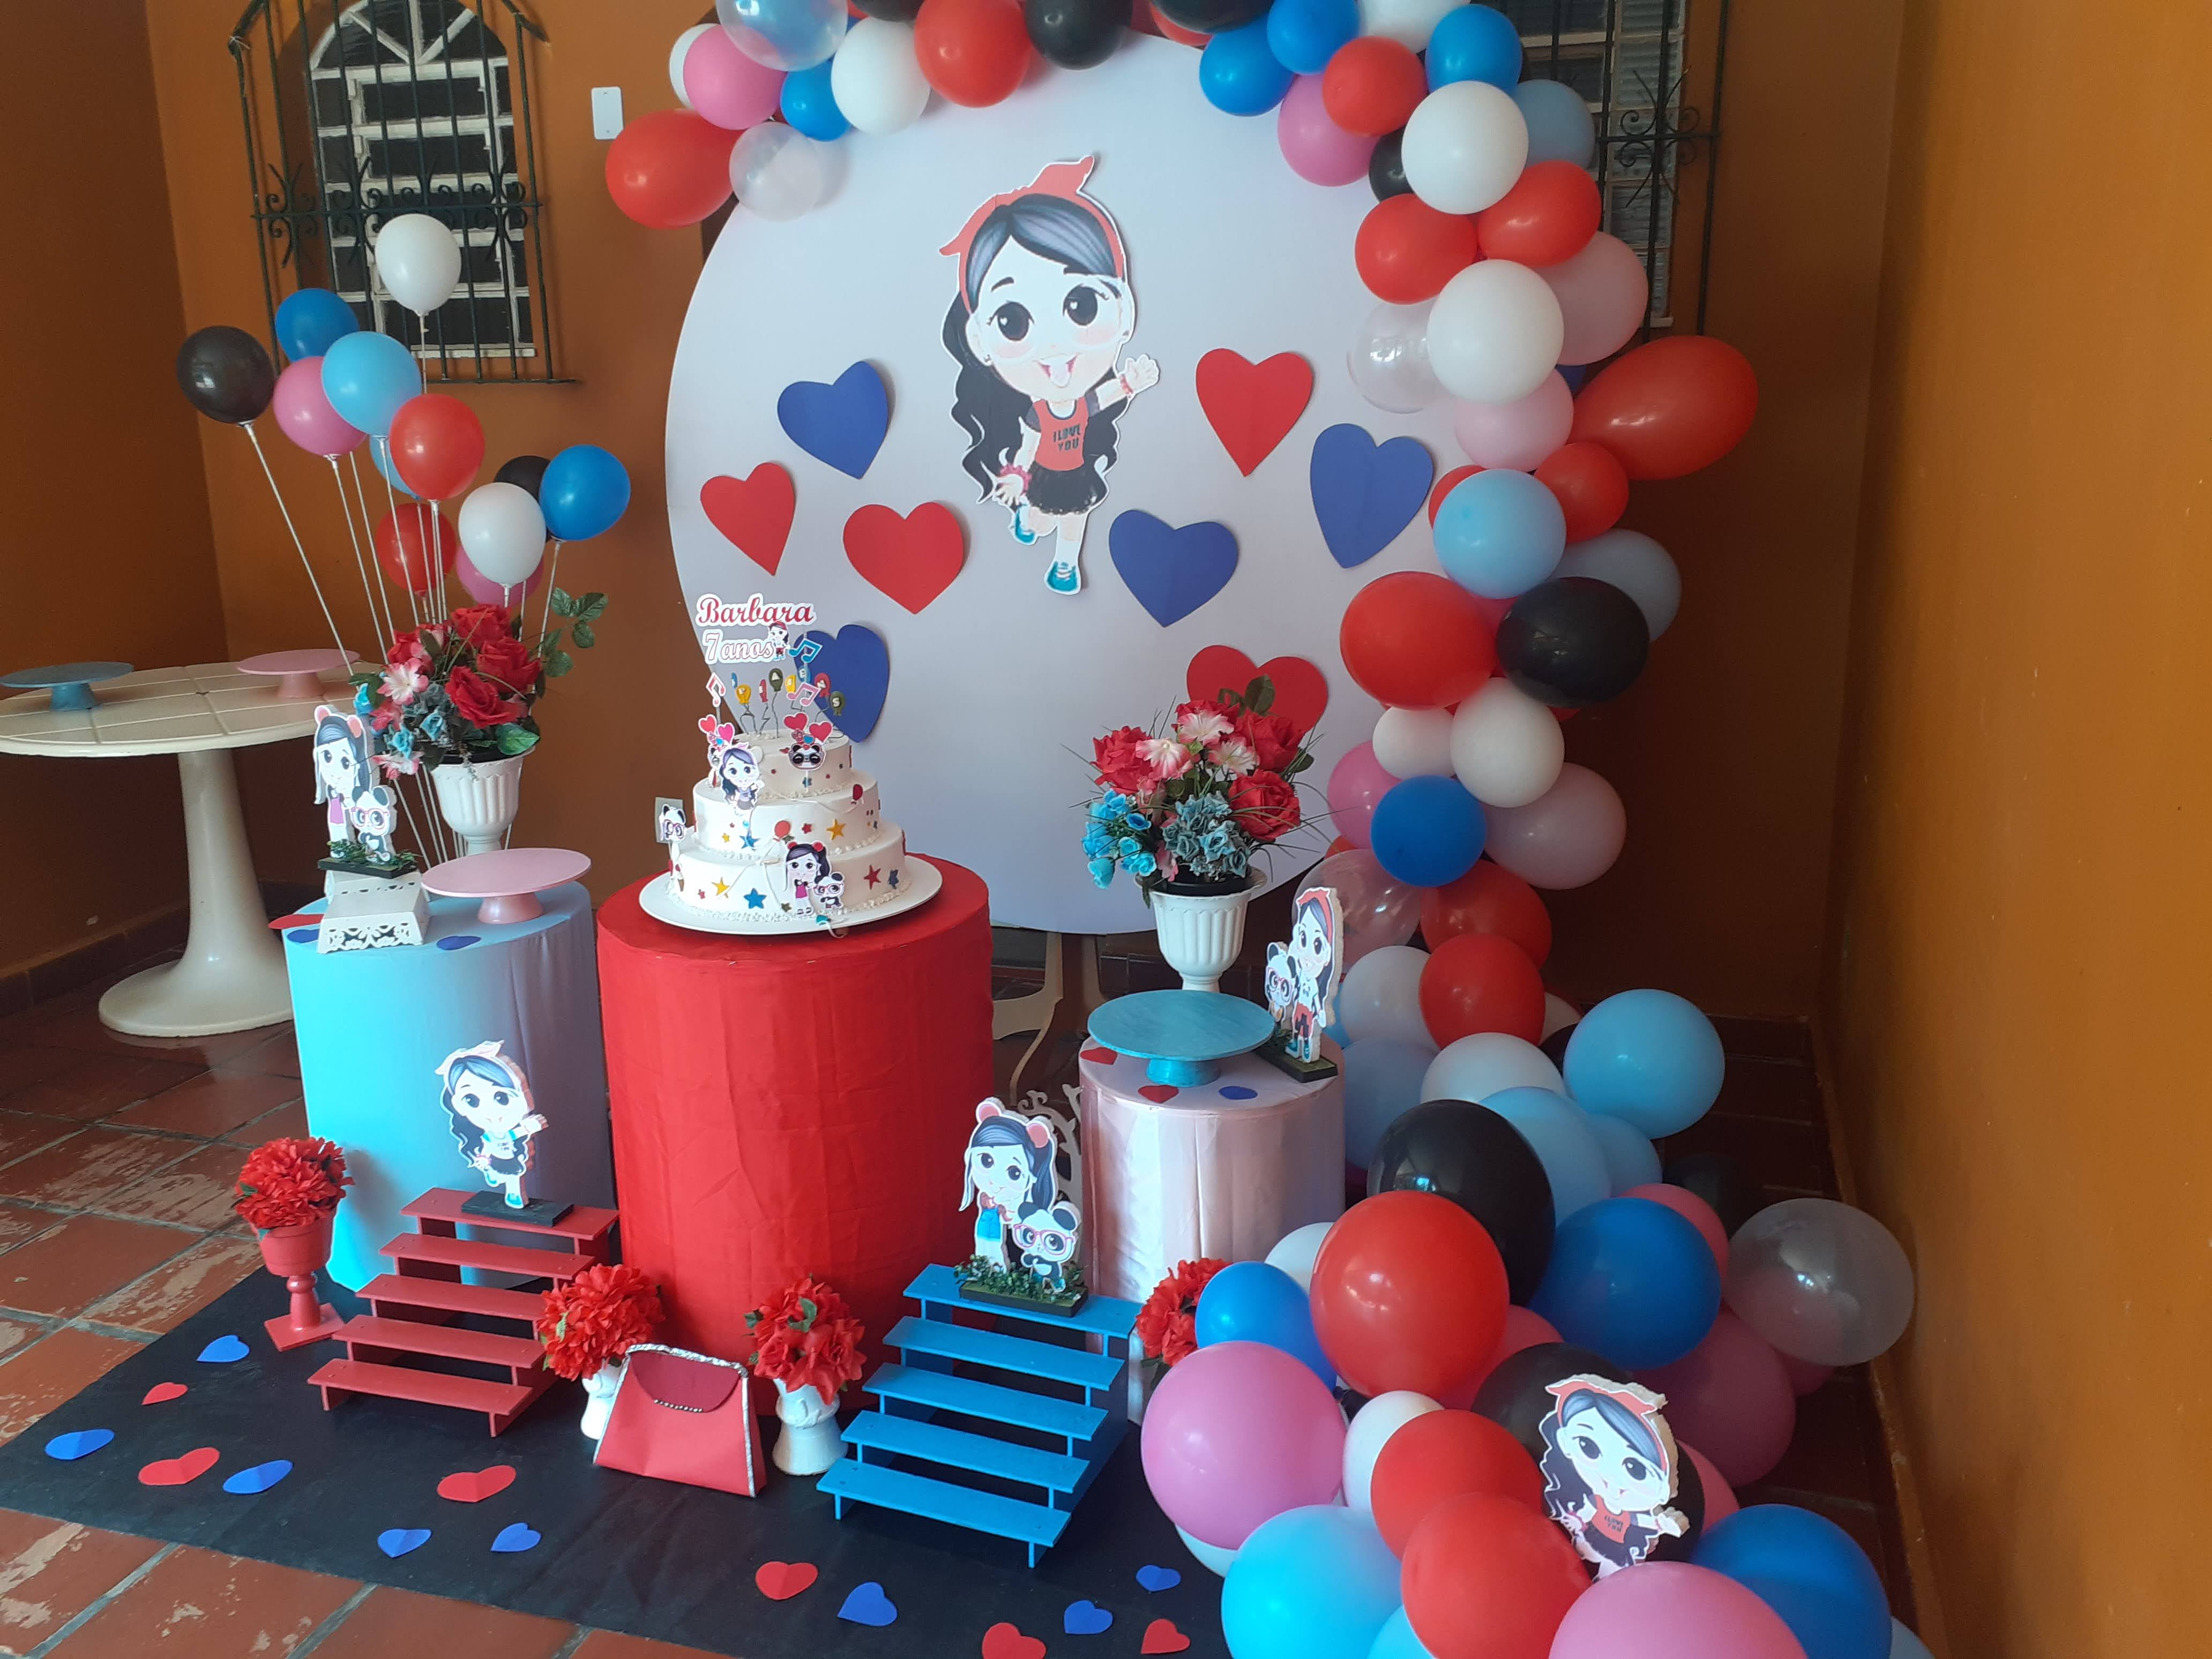 Atelier_ArteFolia: Decoração de festa infantil pool party